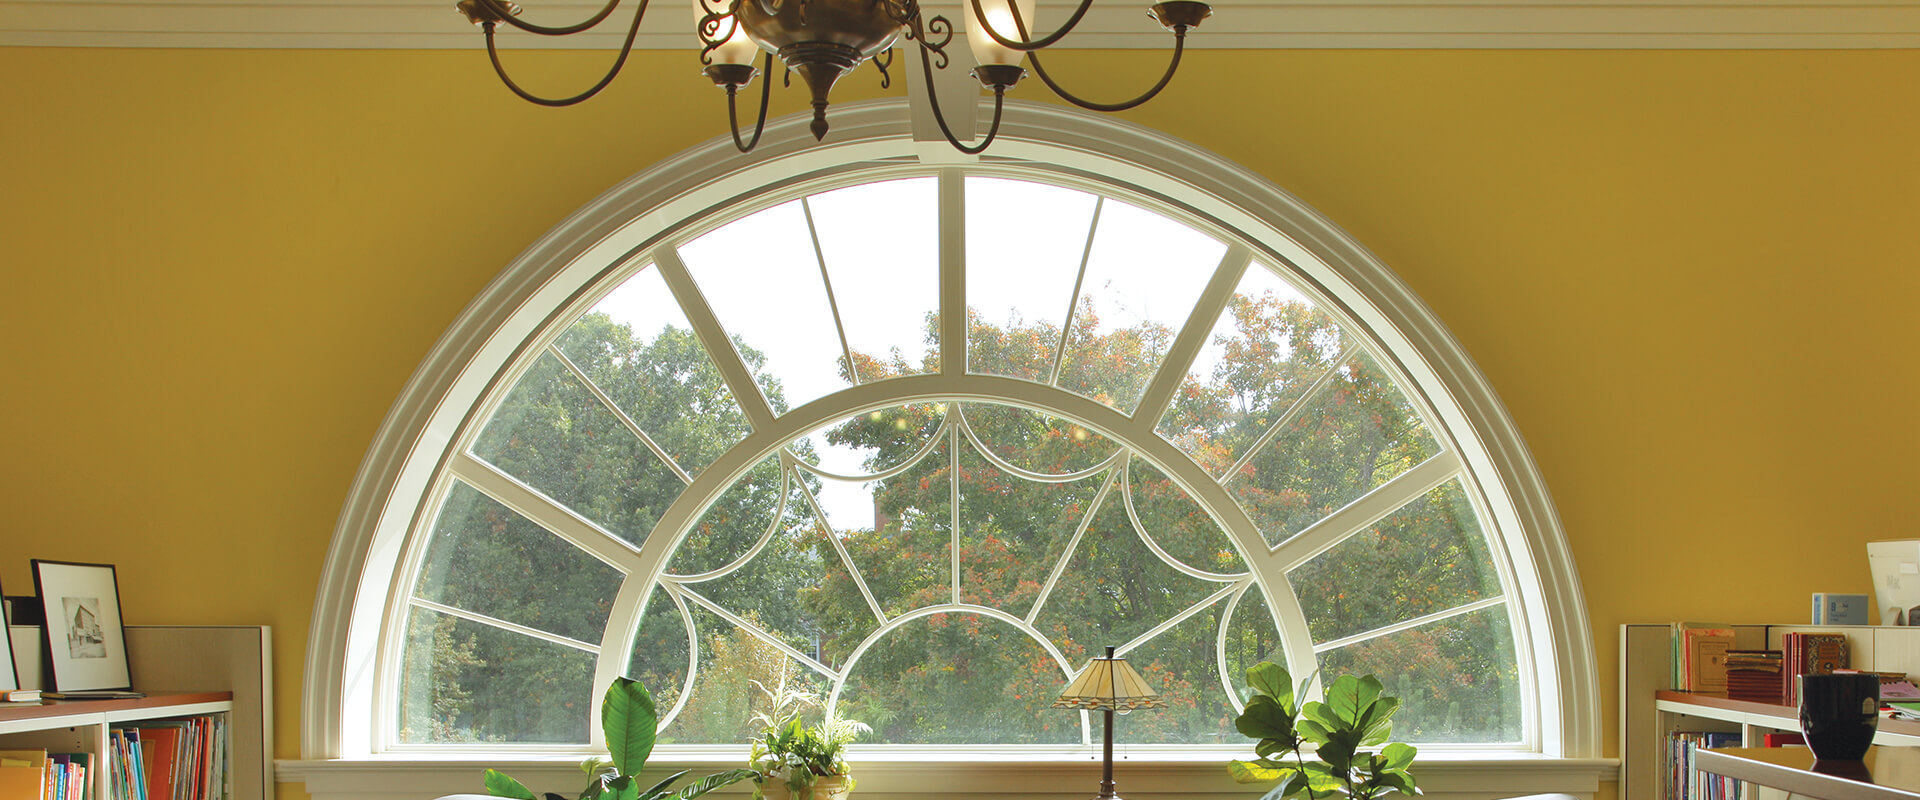 10 Stunning Arched Window Home Design Ideas Kolbe Windows